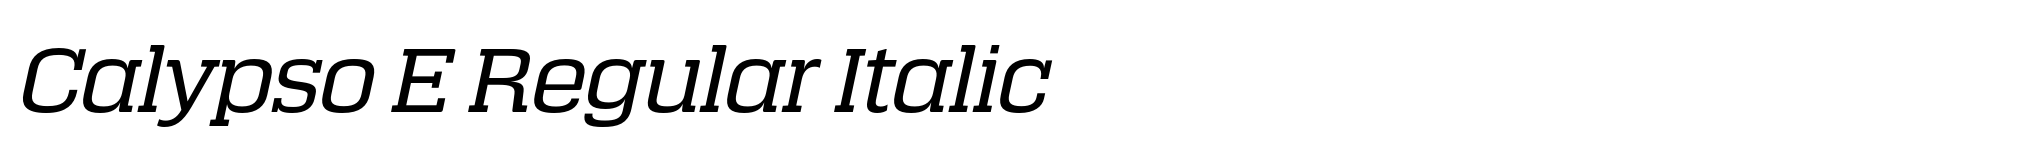 Calypso E Regular Italic image